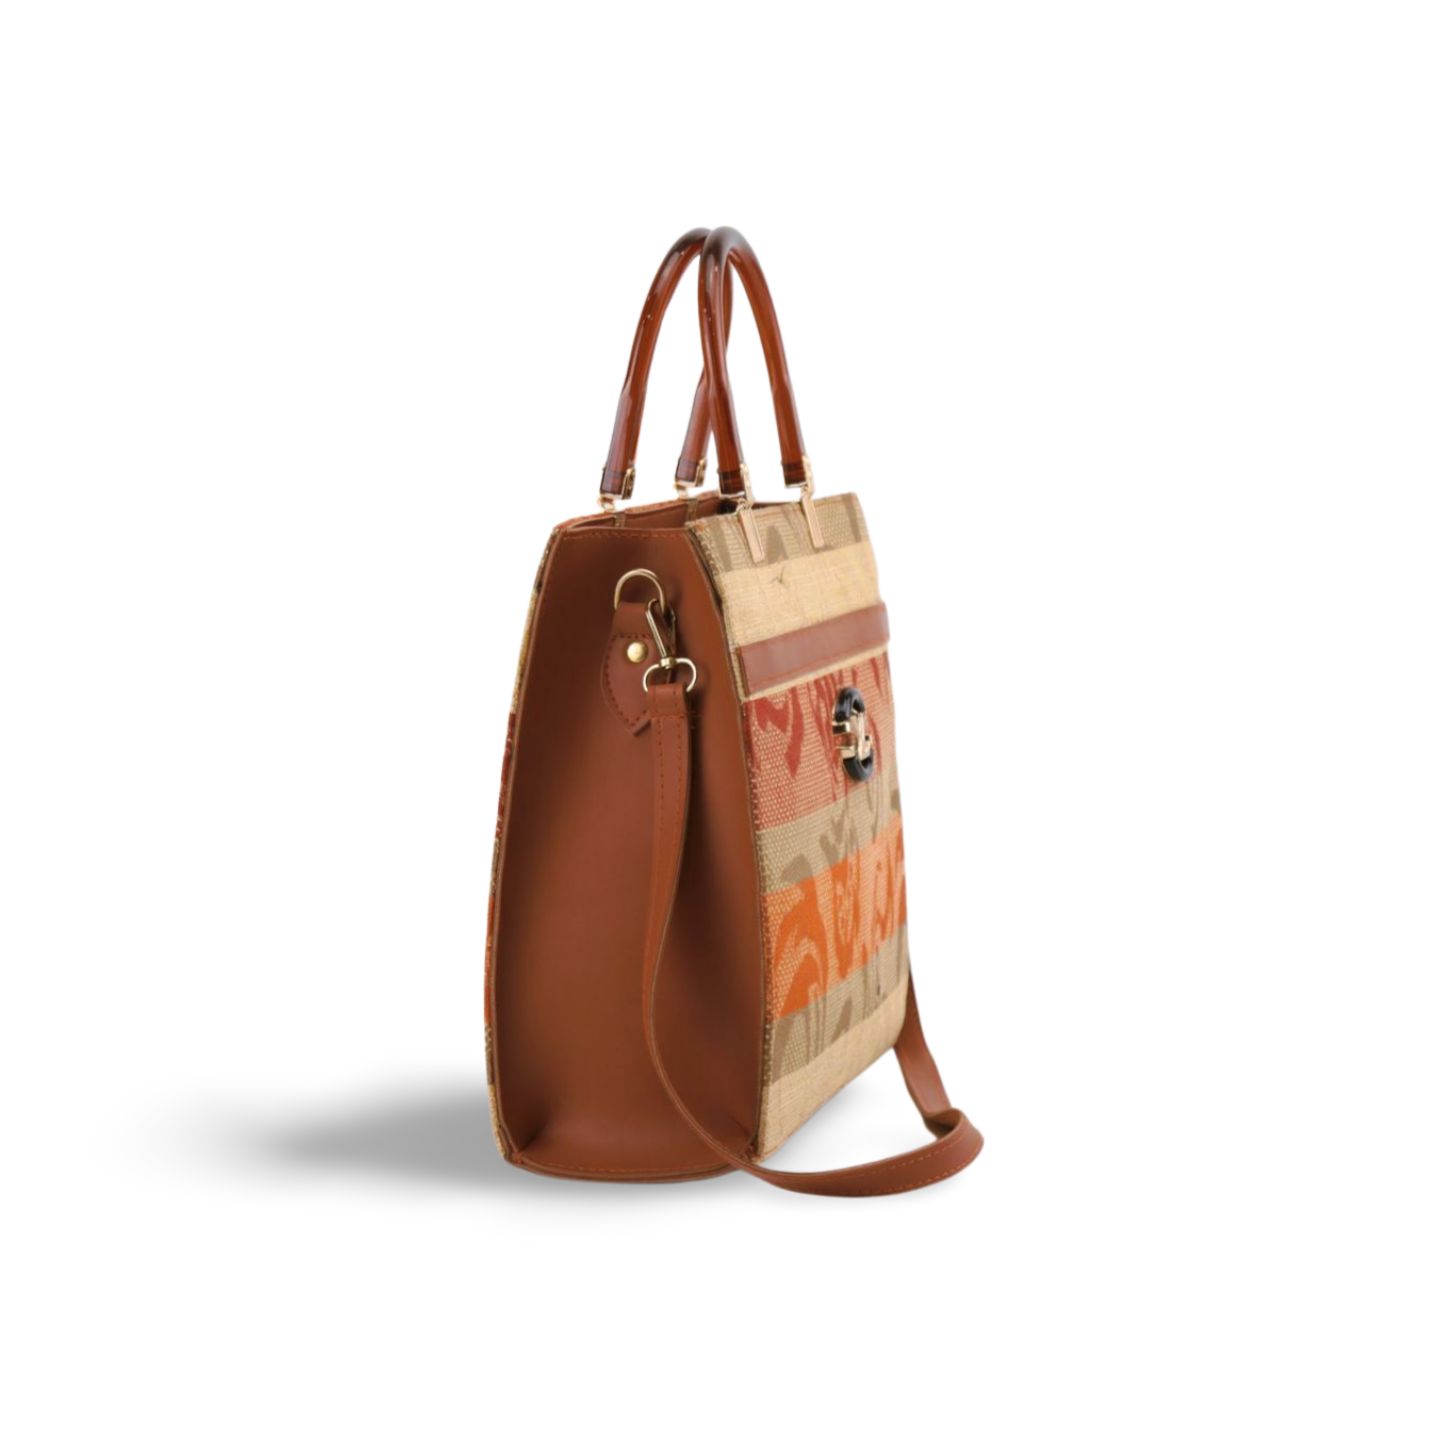 Stylish Striped Top Handle Handbag for Everyday Use